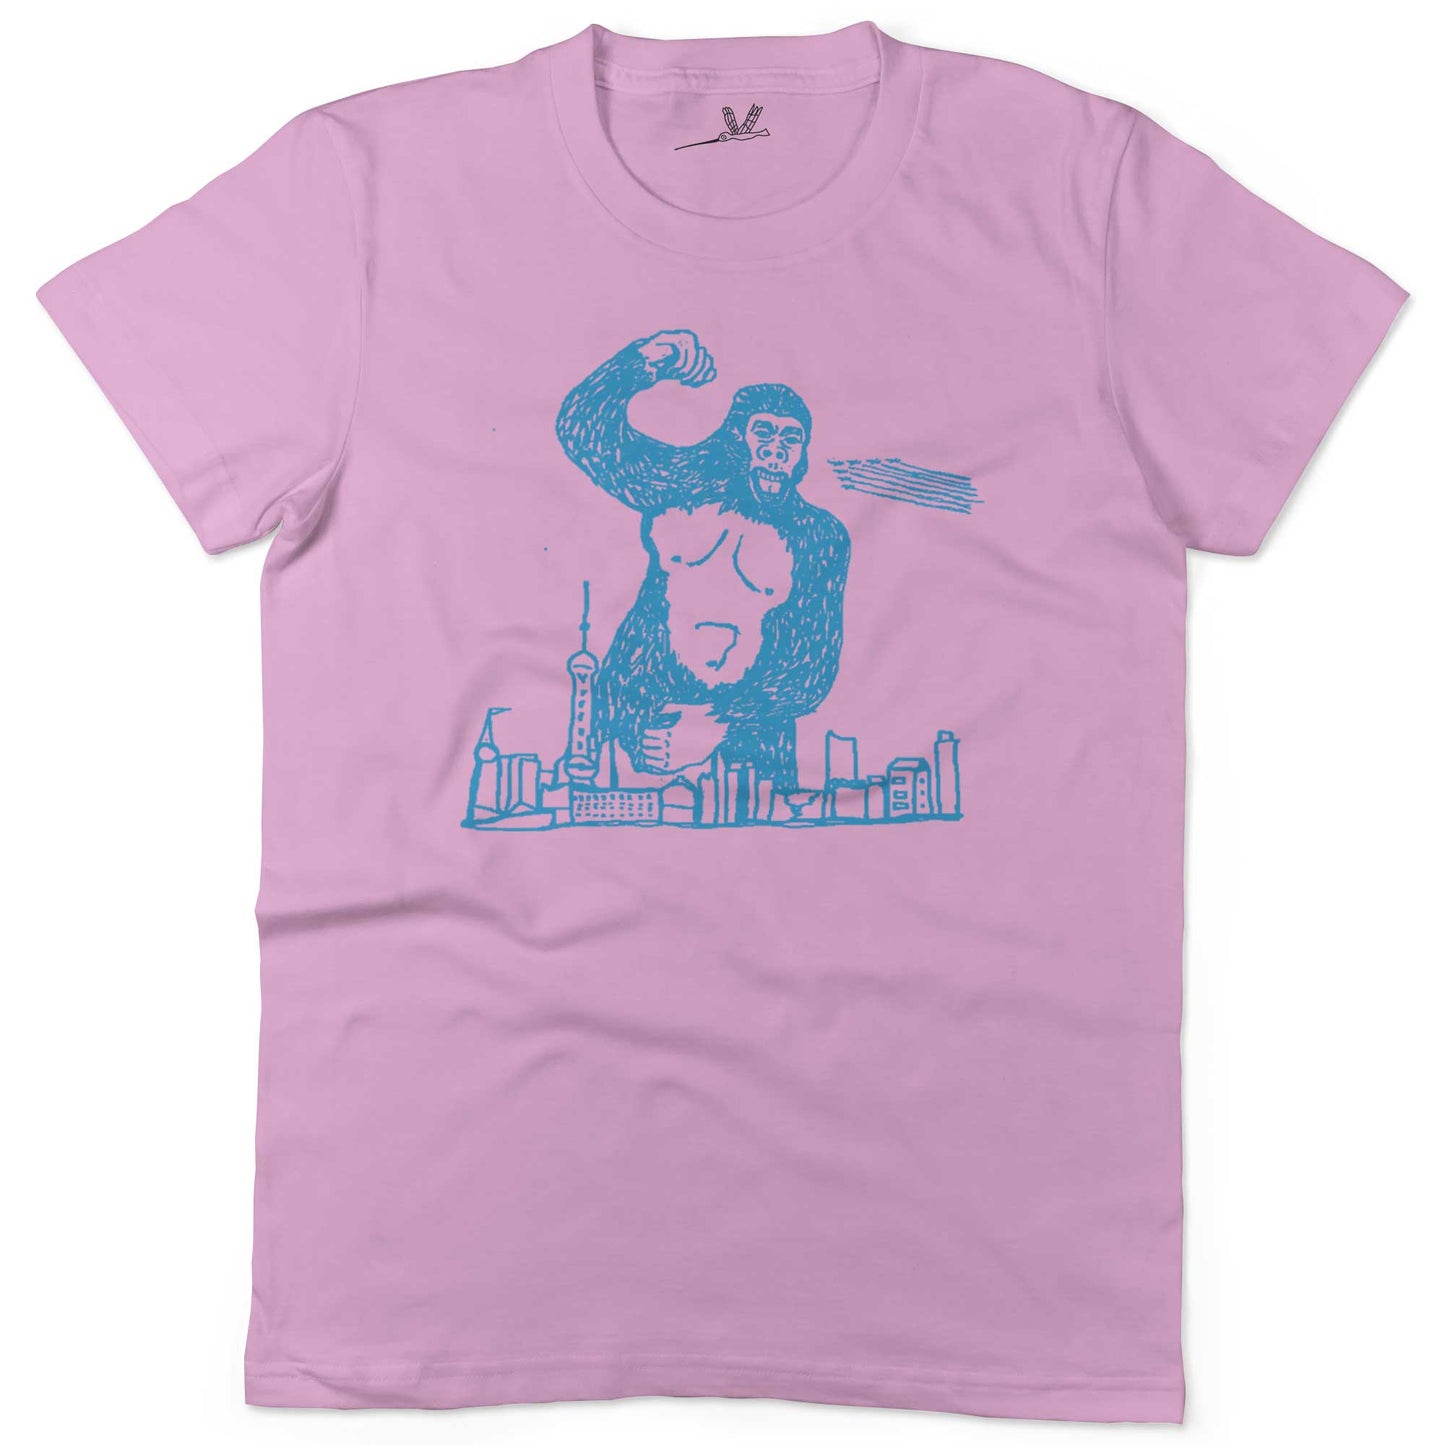 Giant Gorilla Drawing Unisex Or Women's Cotton T-shirt-Pink-Woman